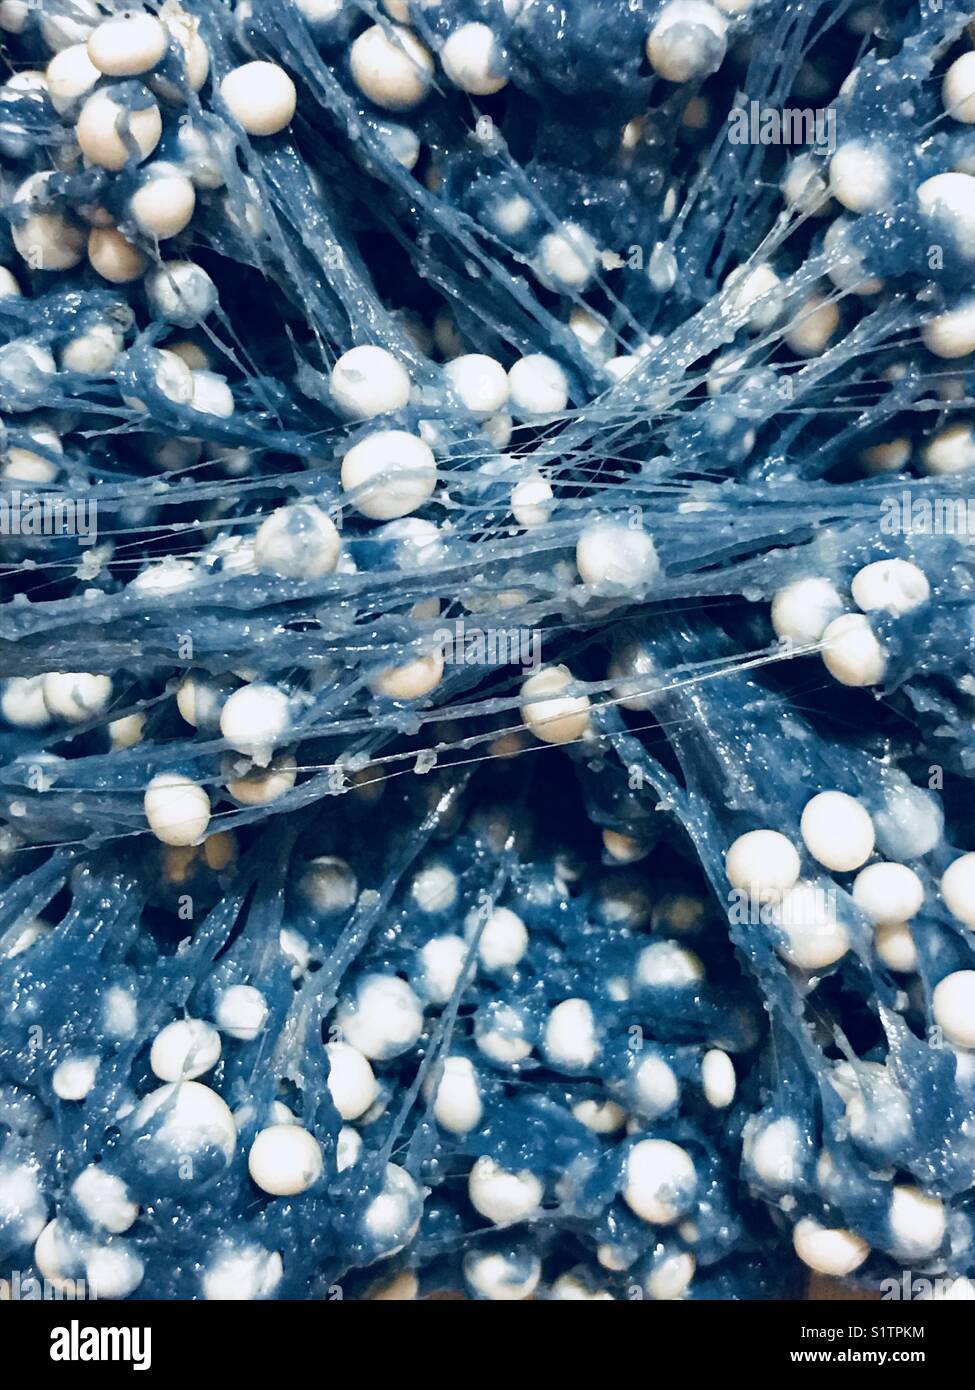 Blue slimy with White balls Stock Photo